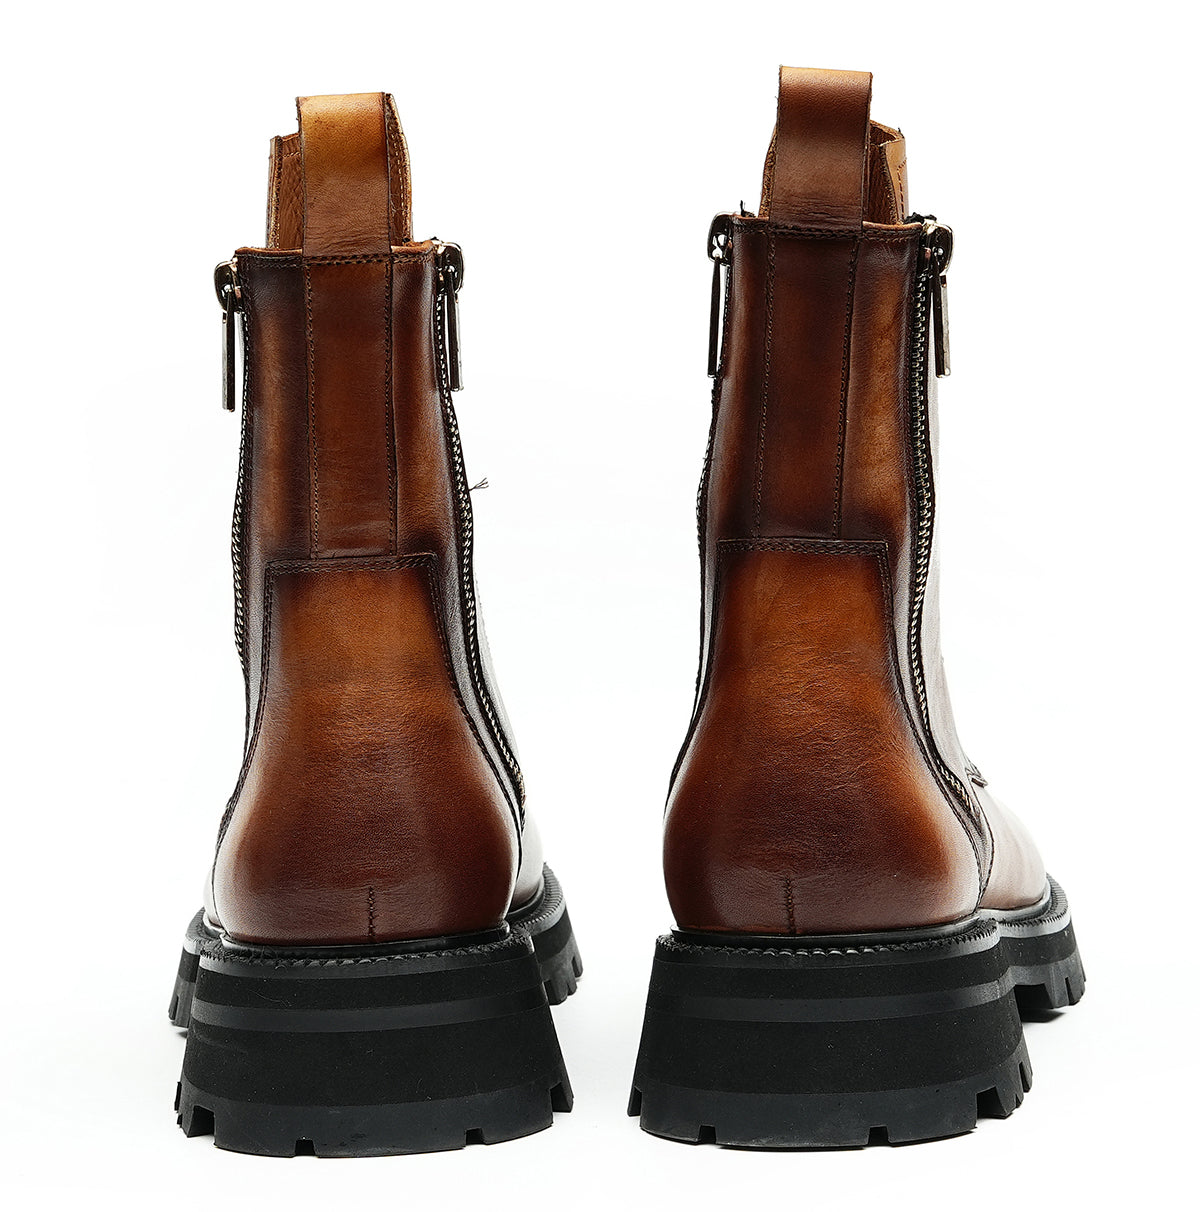 Men's Fashion Double Zipper Casual Mid Calf Boots